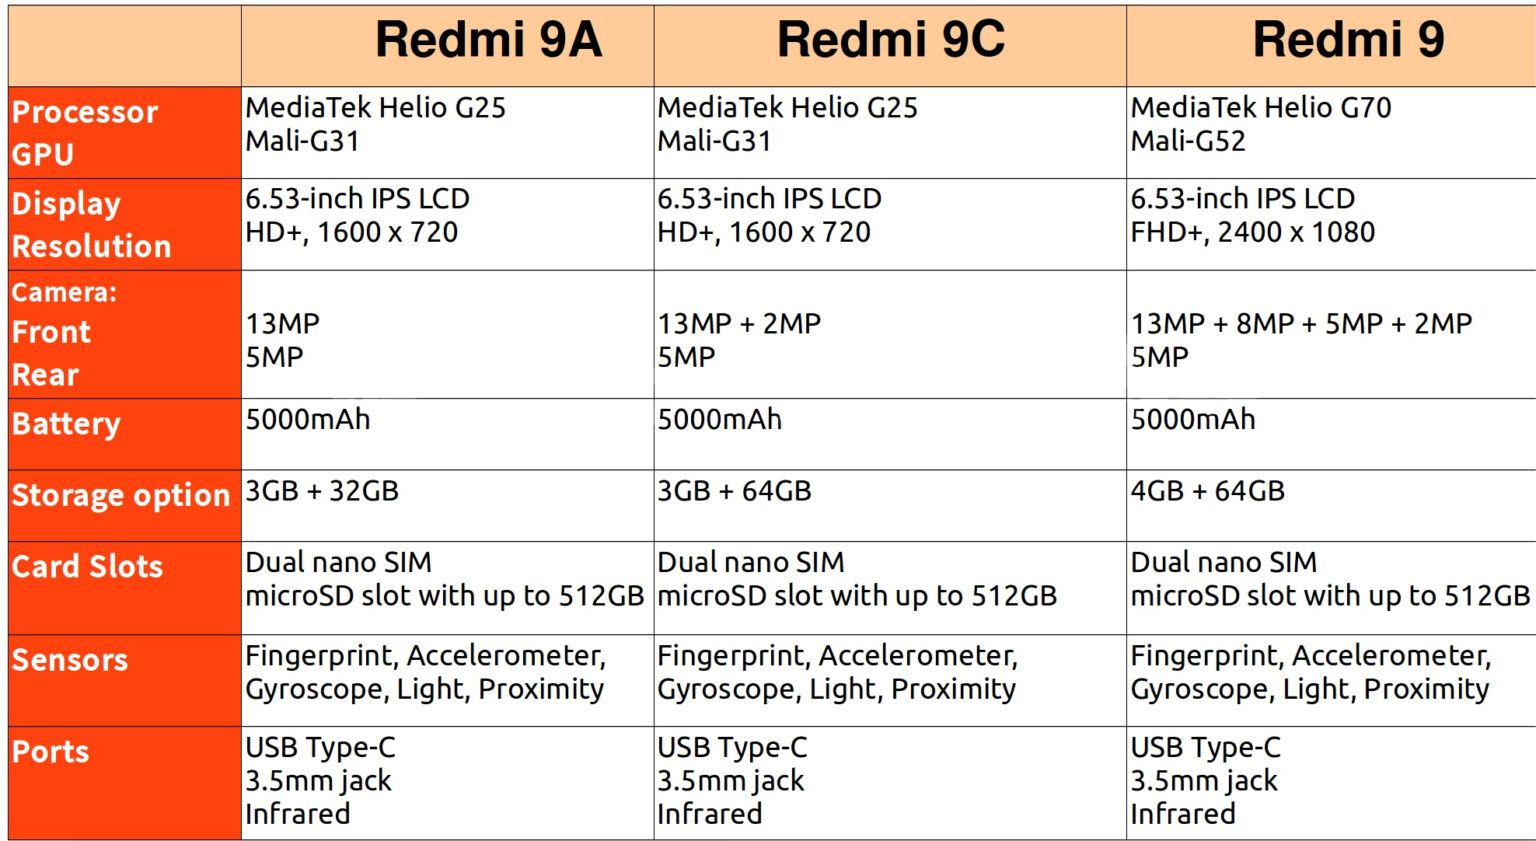 Технические Характеристики Xiaomi Redmi 8